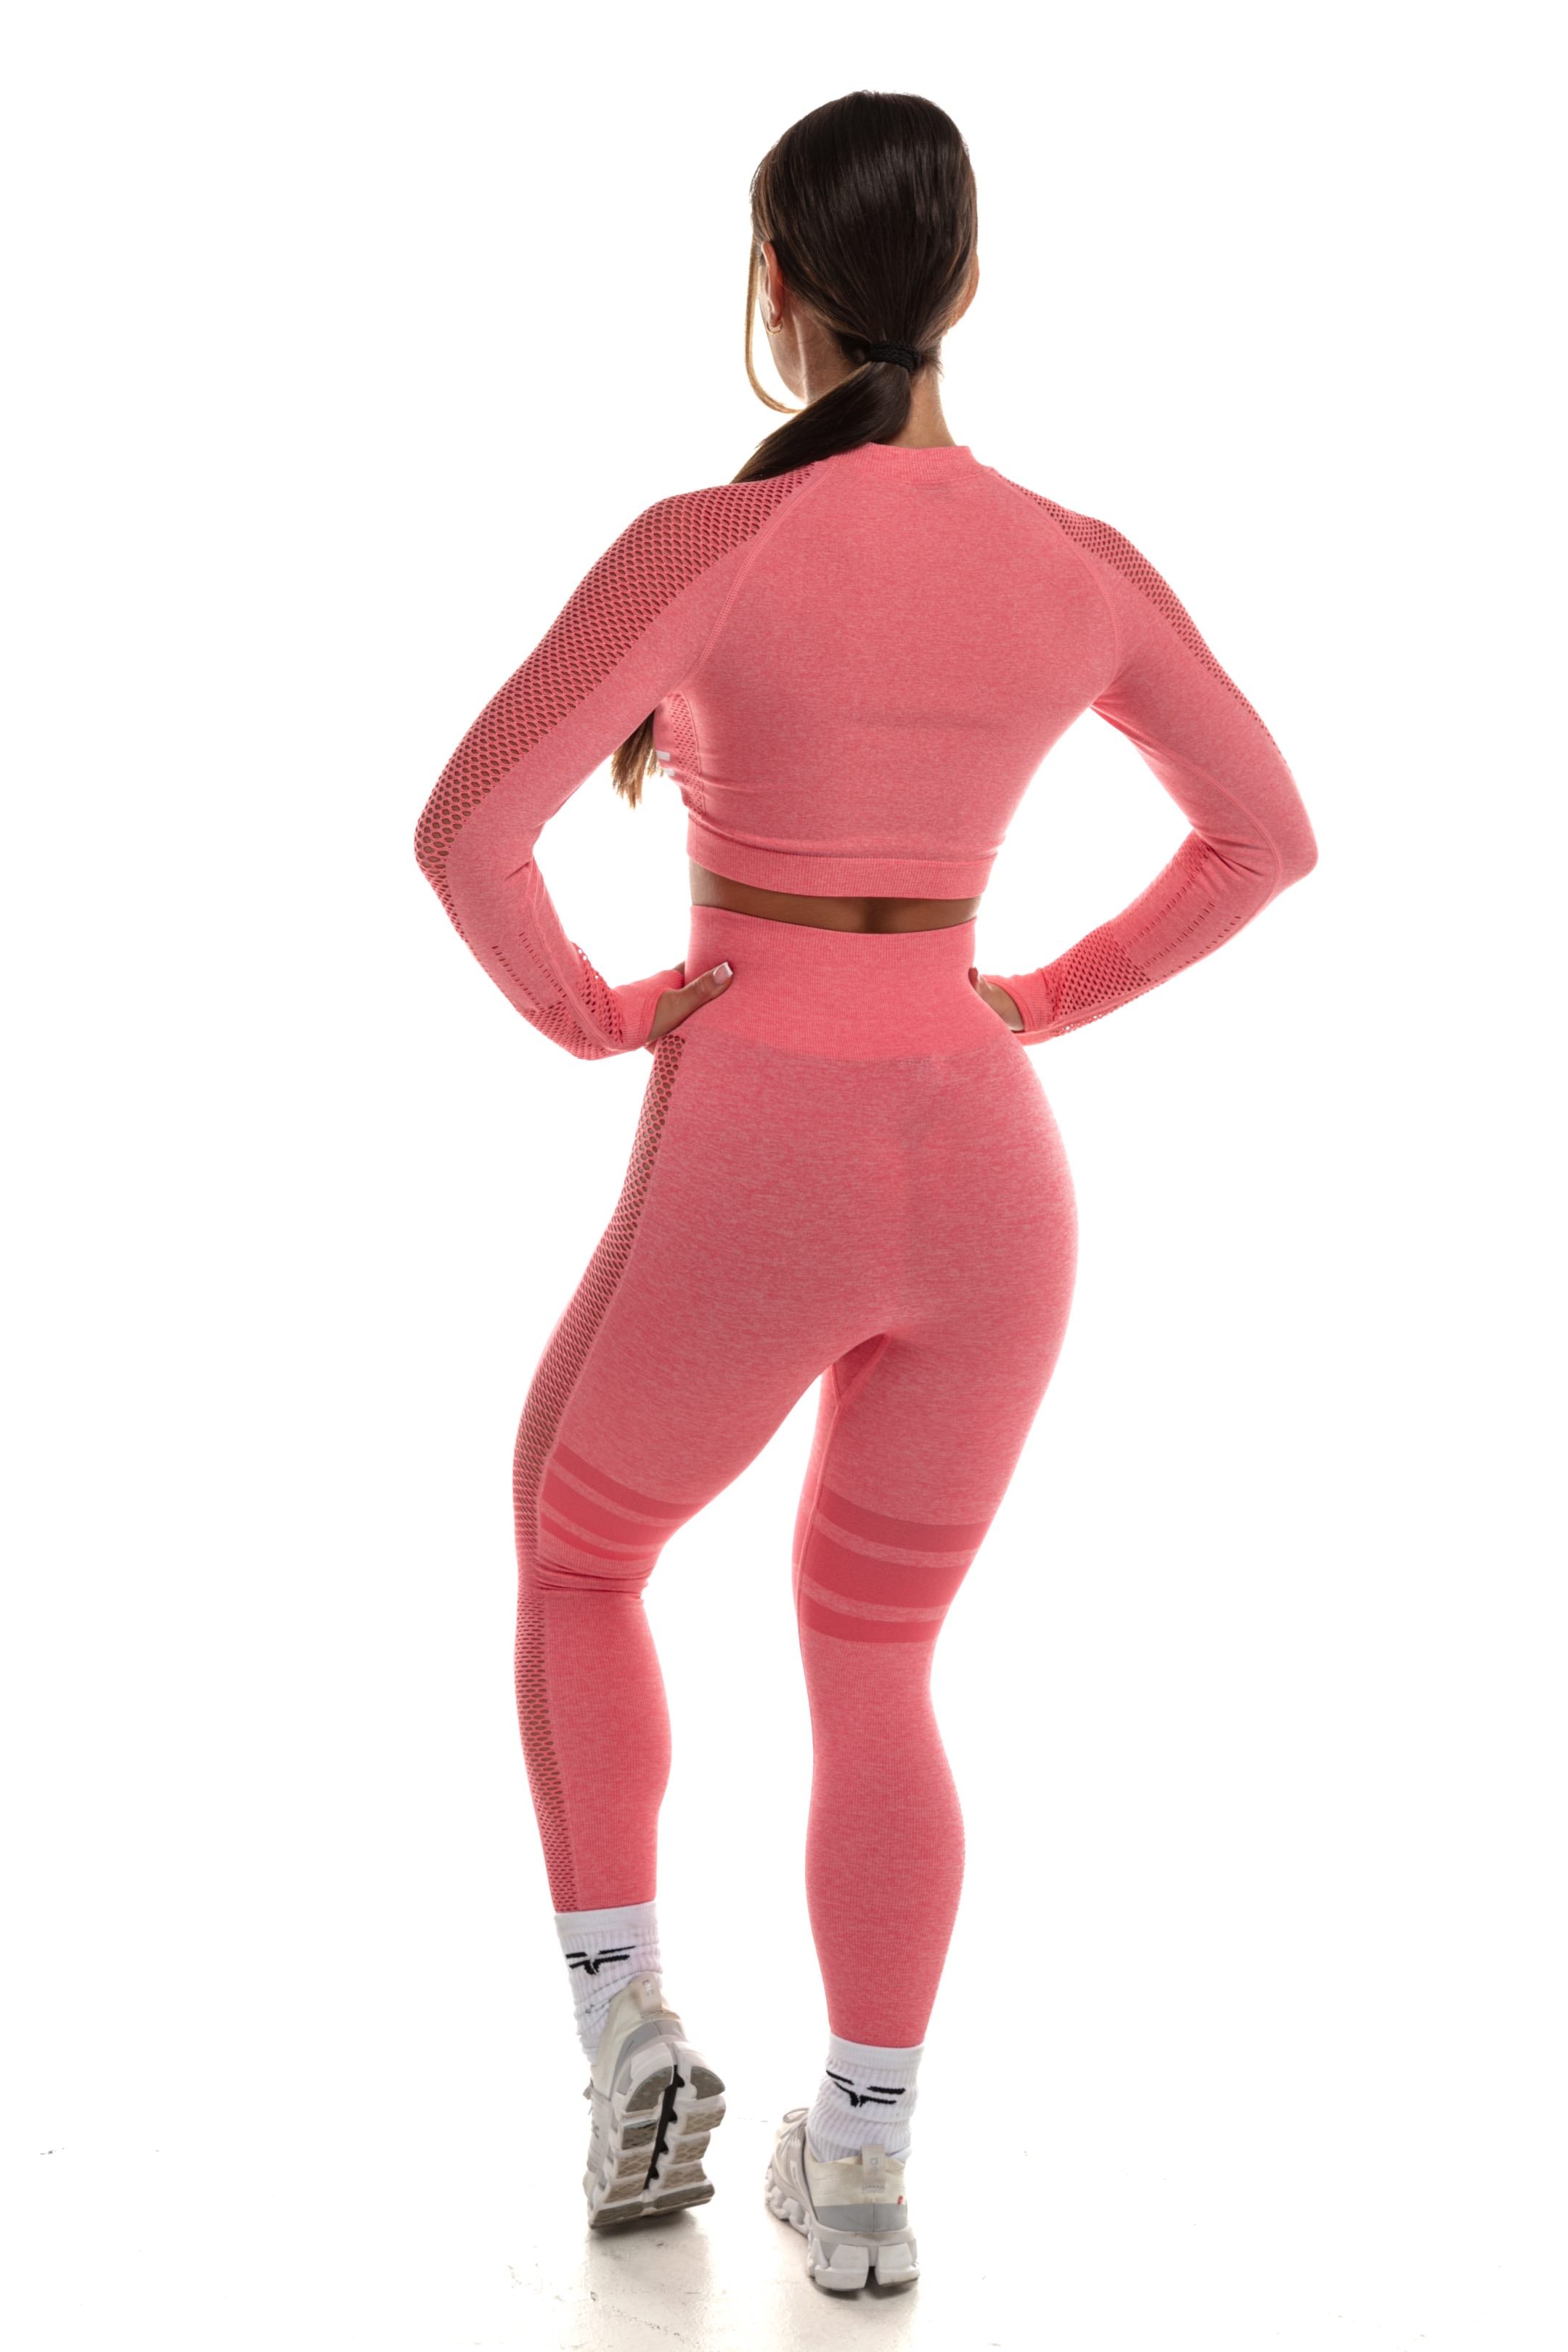 GymFreak Womens Yoga Set - Pink